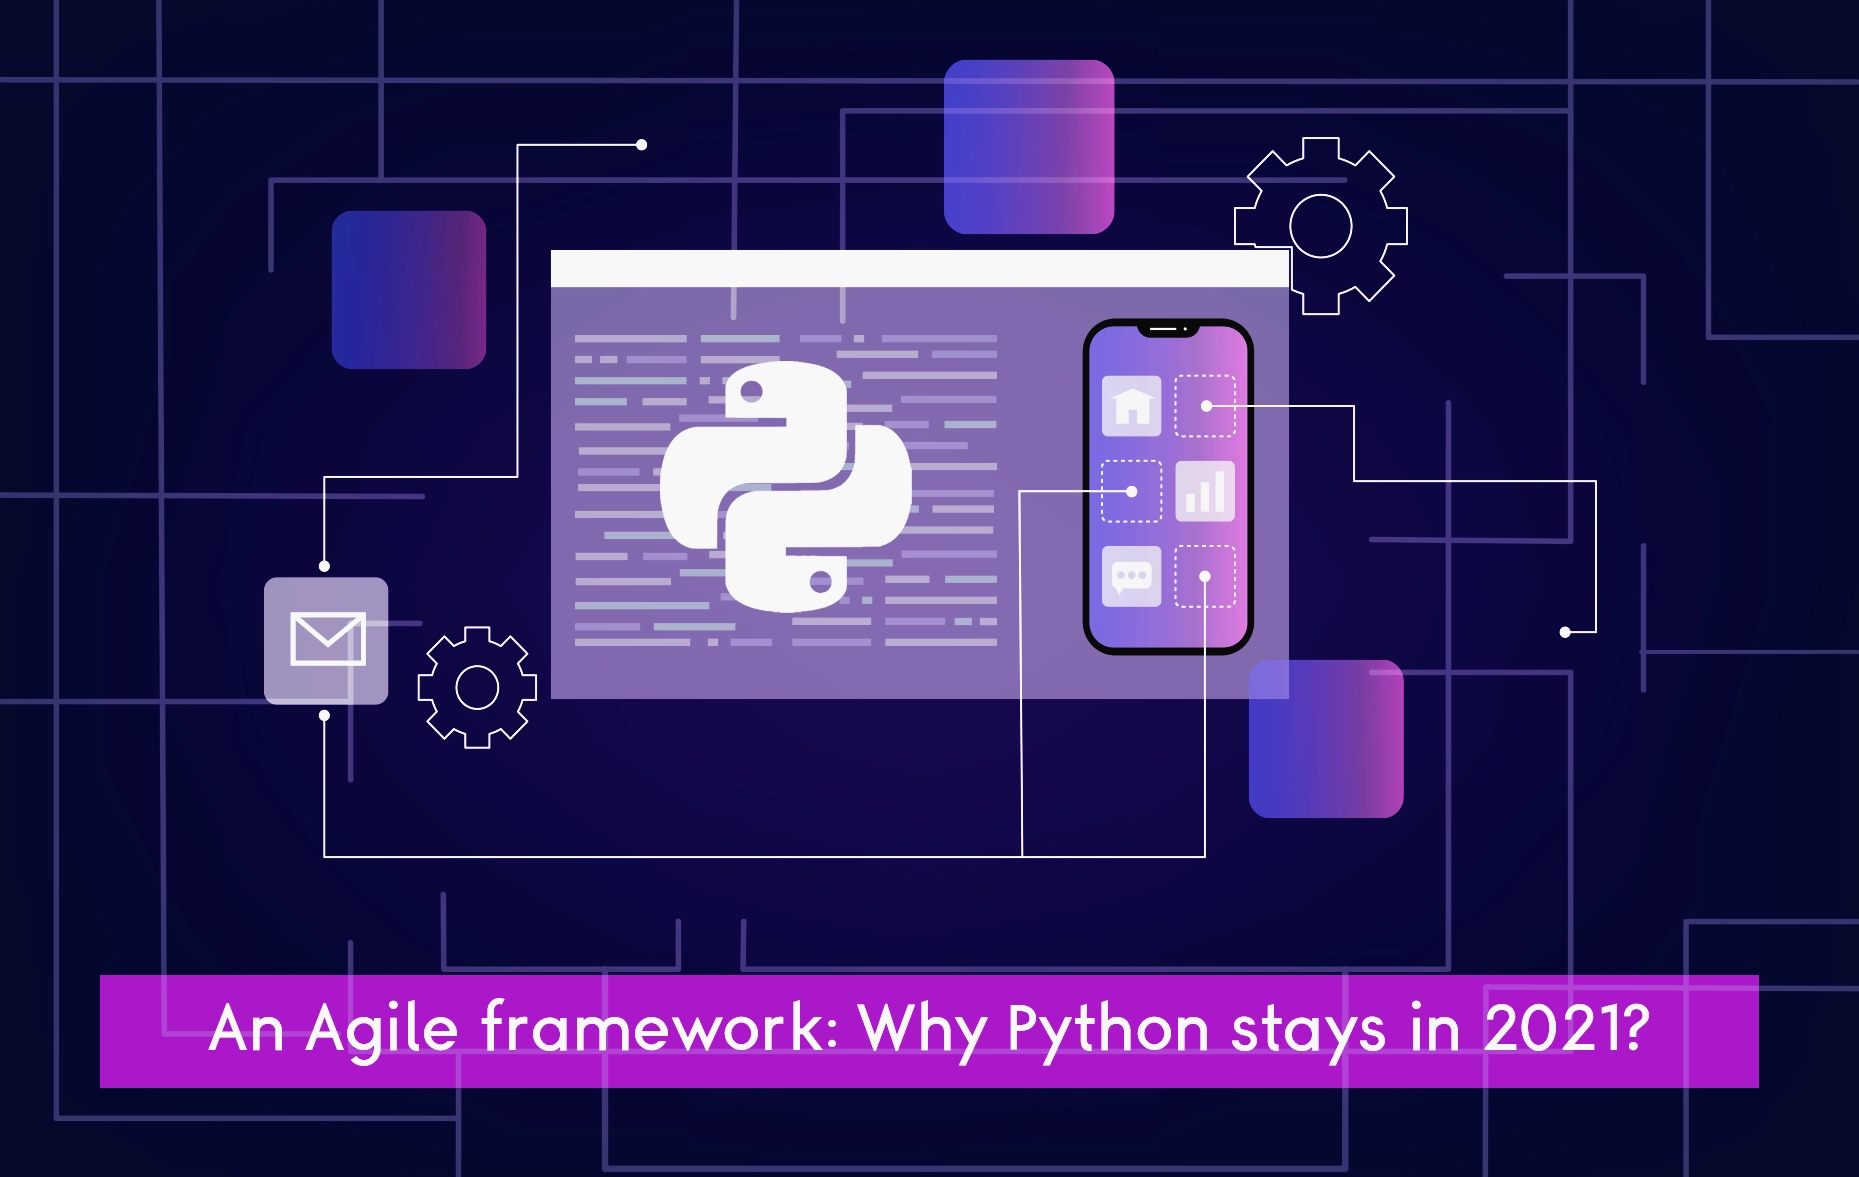 An Agile framework: Why Python stays in 2021?